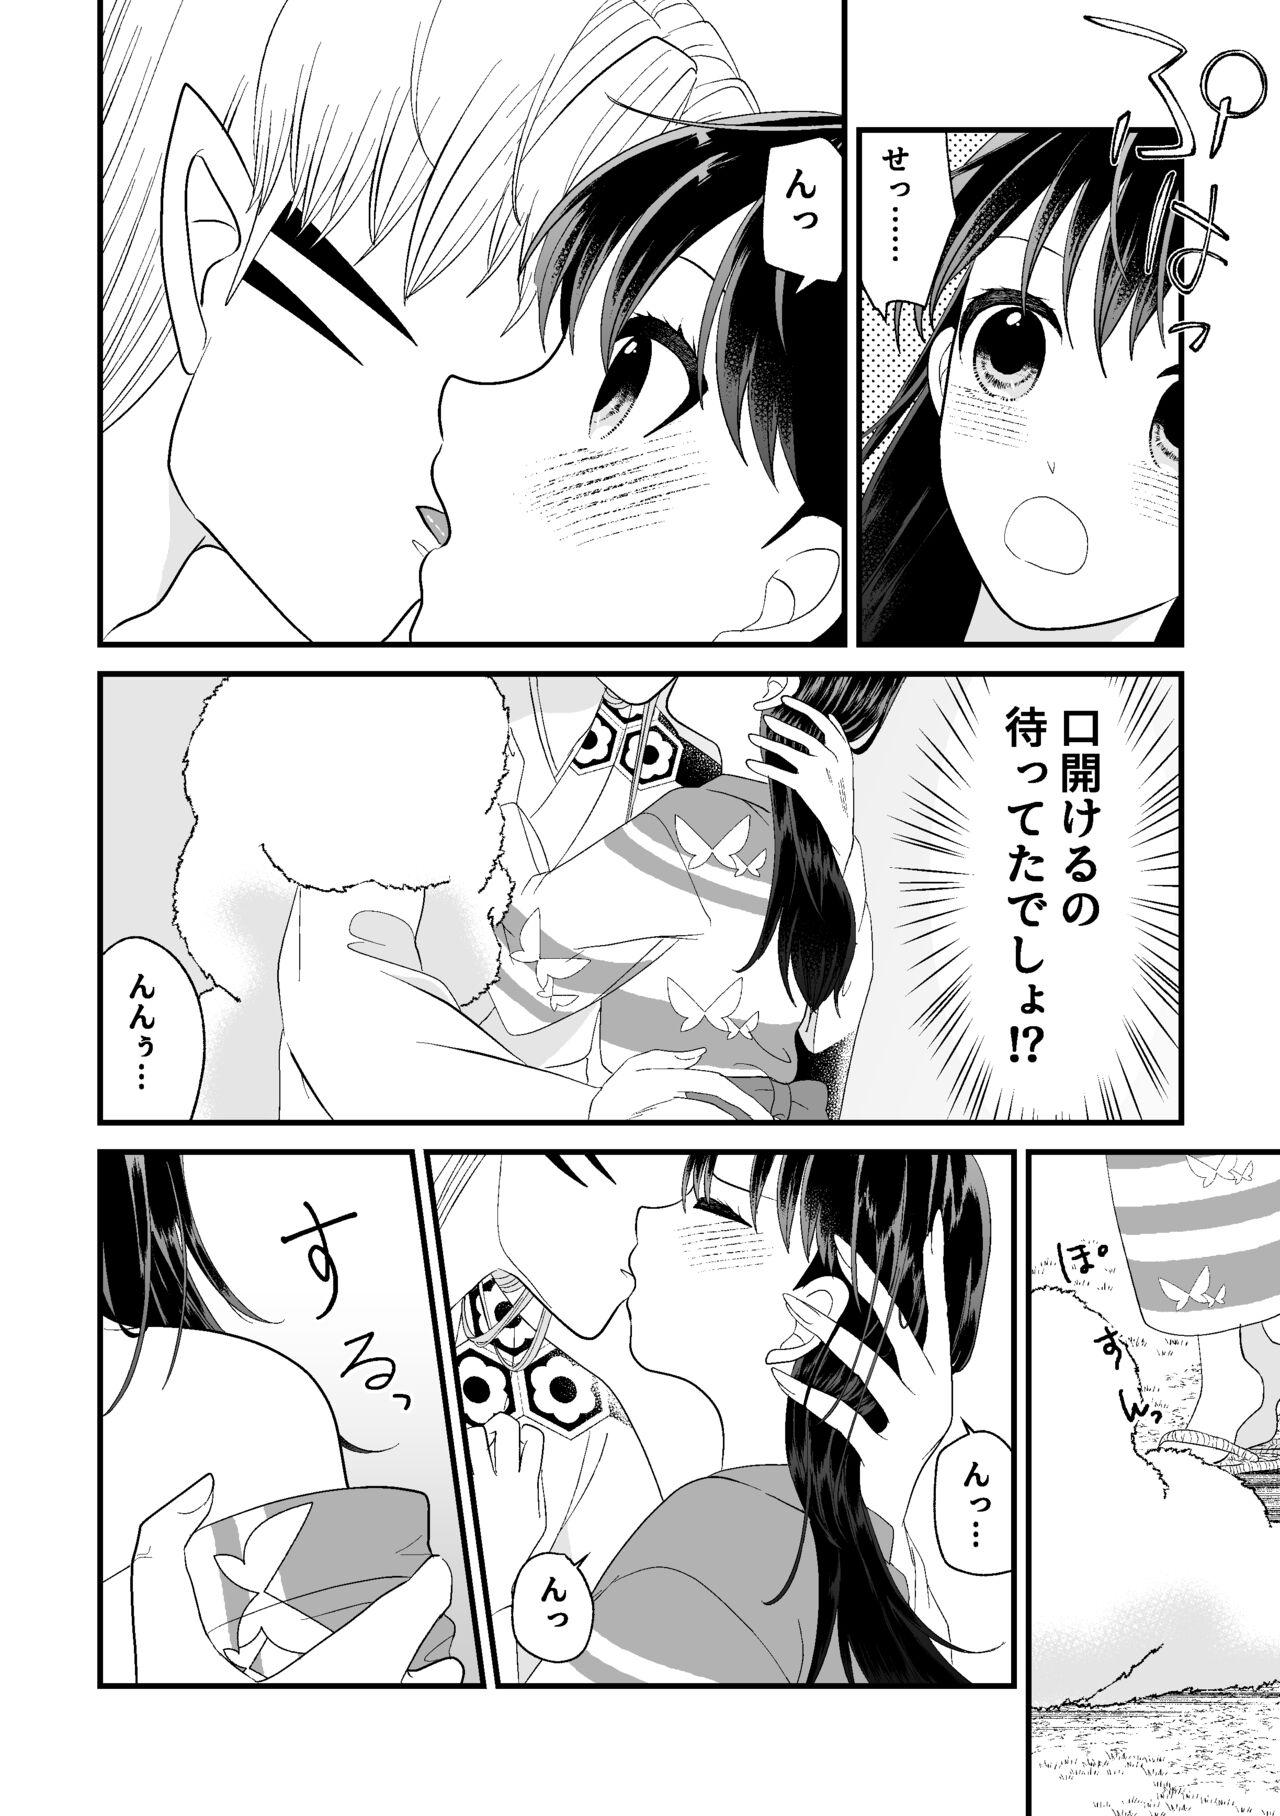 Buttfucking Tatoe Sekai ga Chigatte mo - Inuyasha Bath - Page 8